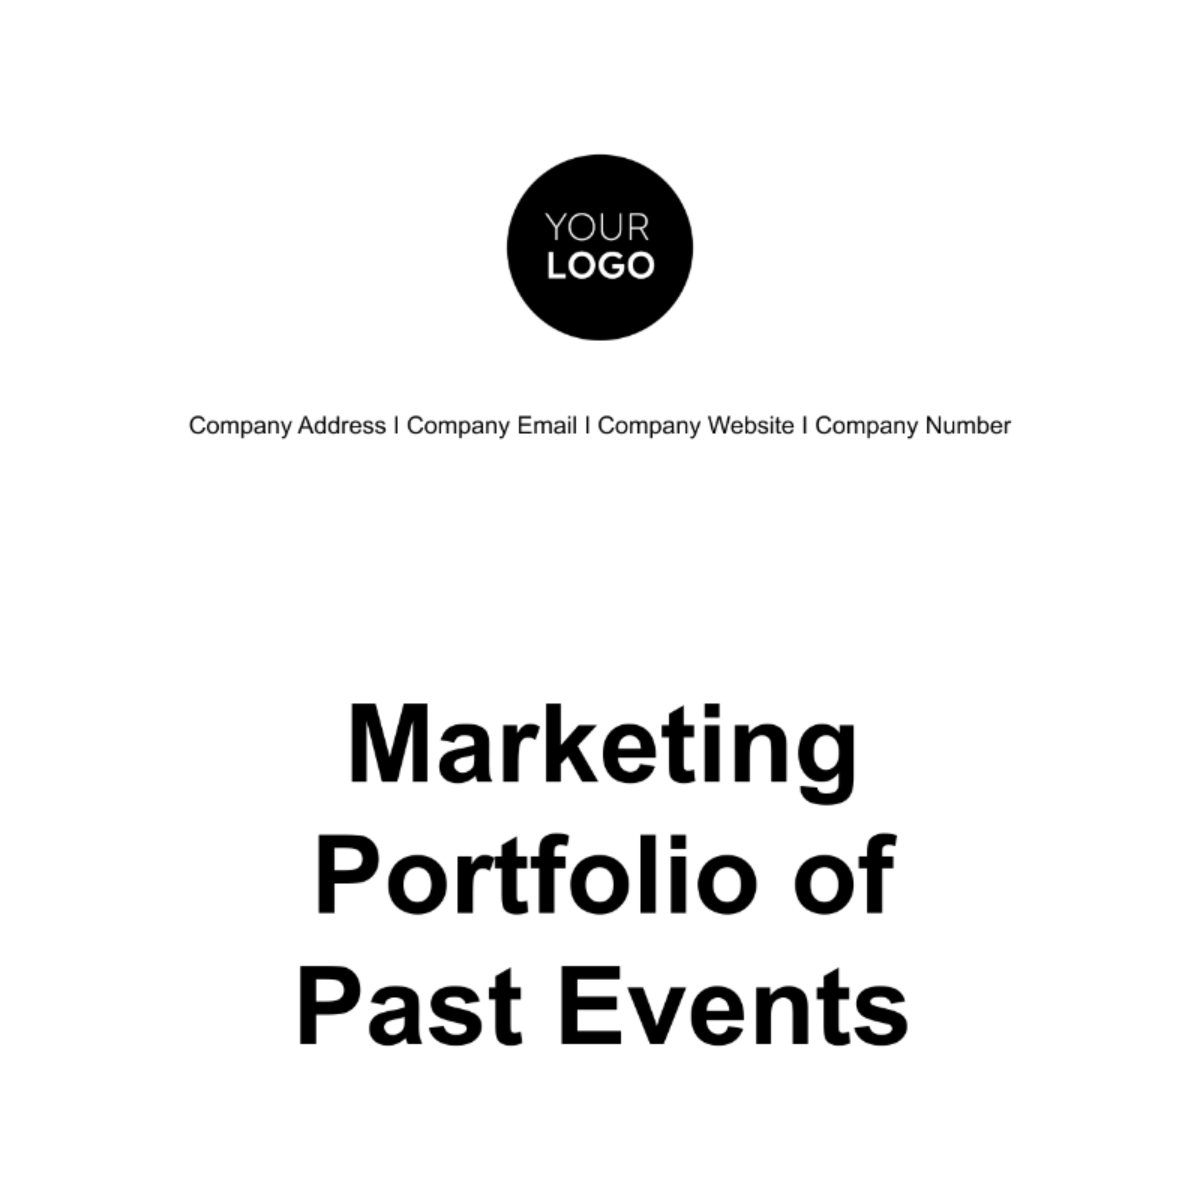 Marketing Portfolio of Past Events Template